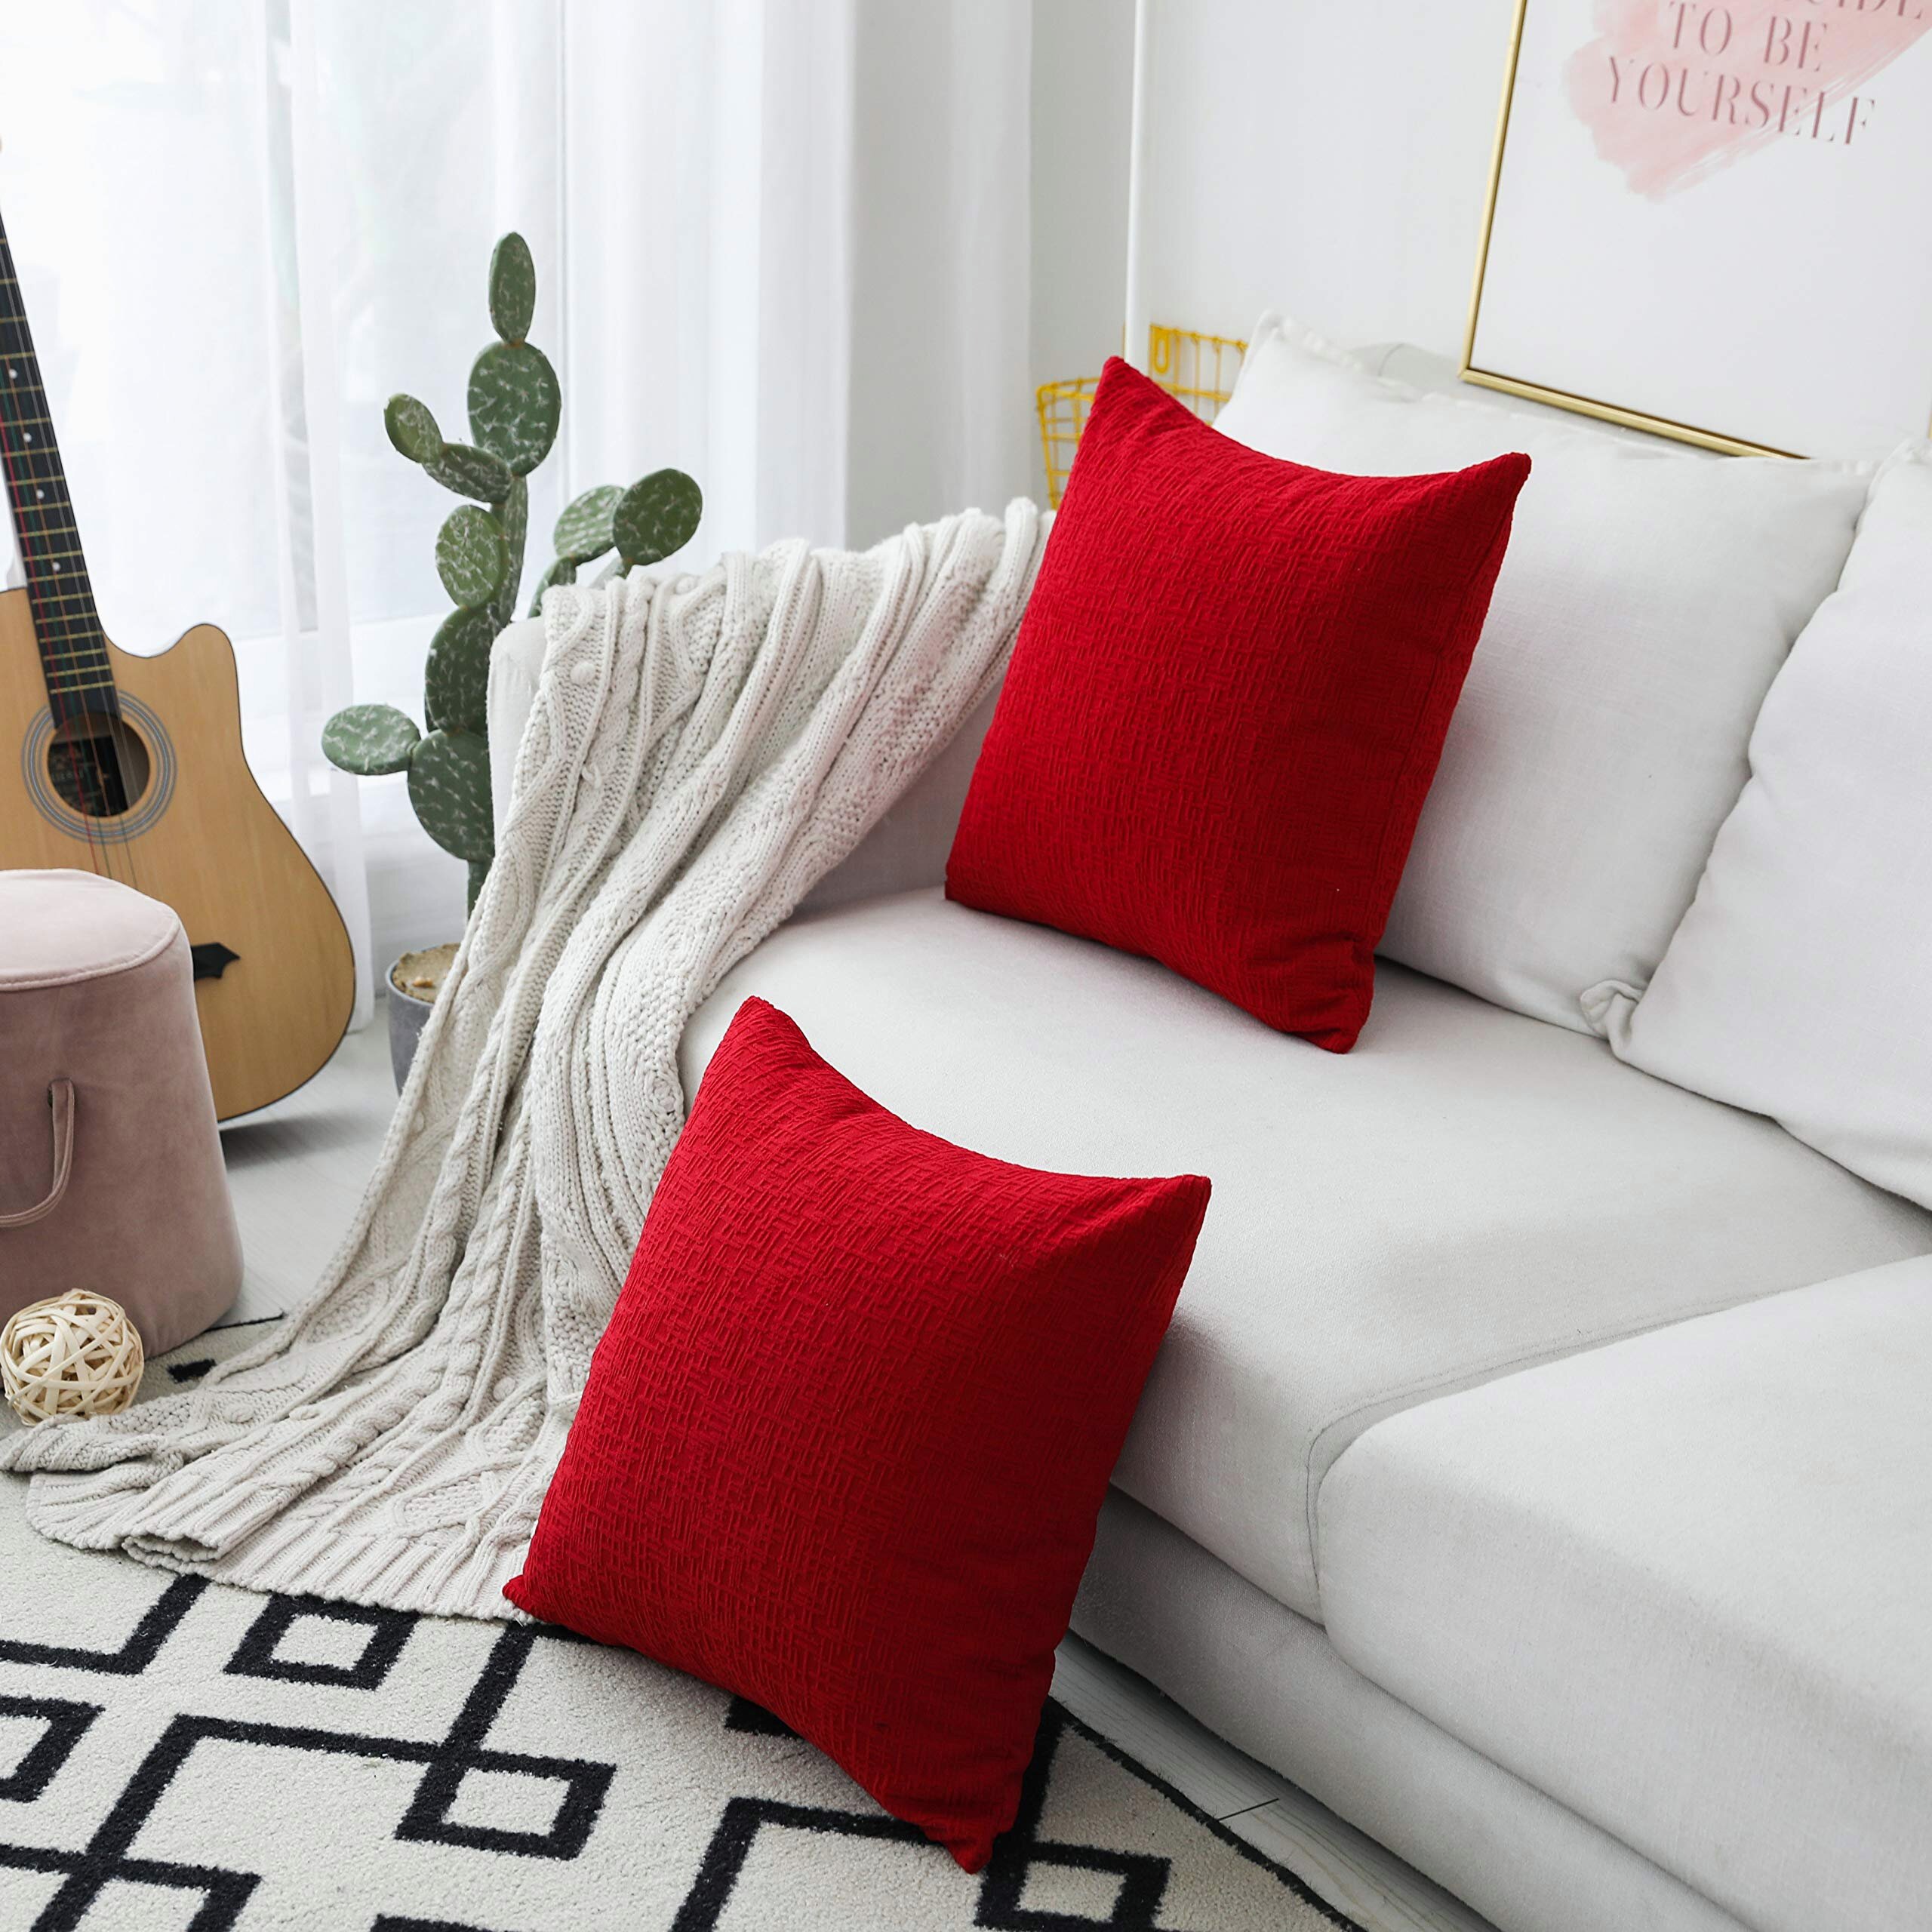 30cm X 50cm Pillow Case Luxury Cushions Cases Waterproof Bedroom Garden Sofa Car 